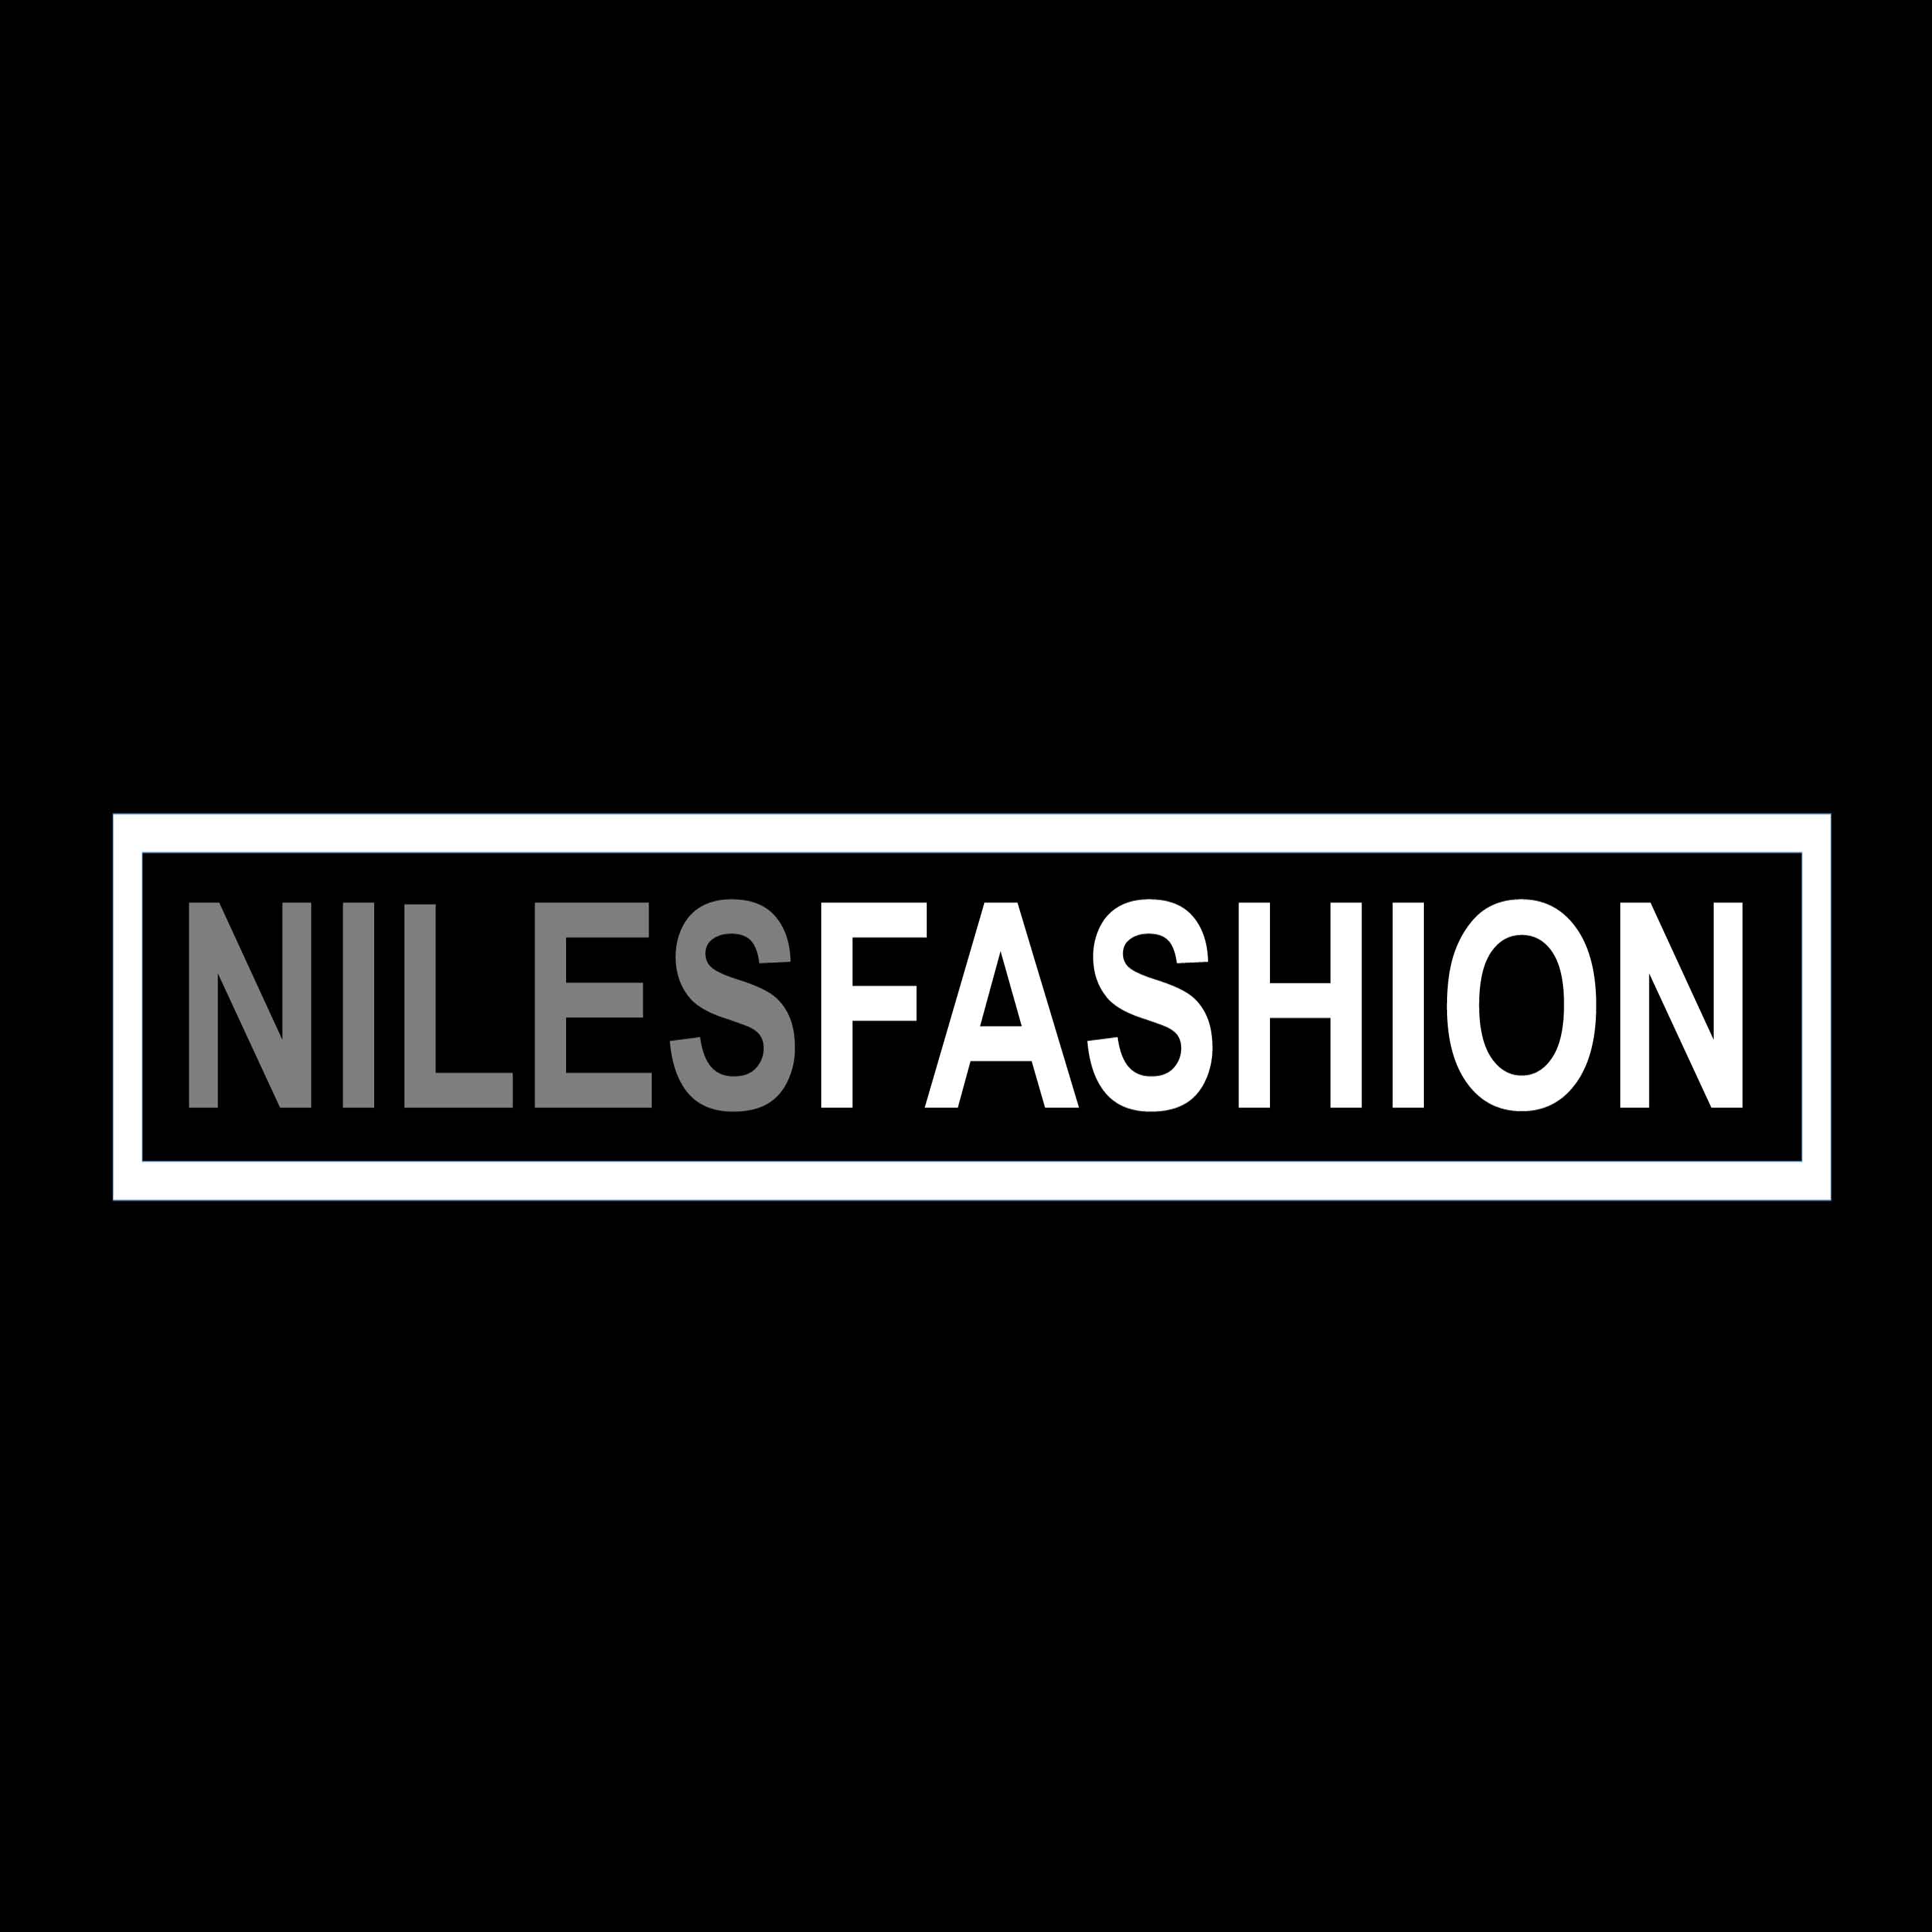 Niles Fashion Logo